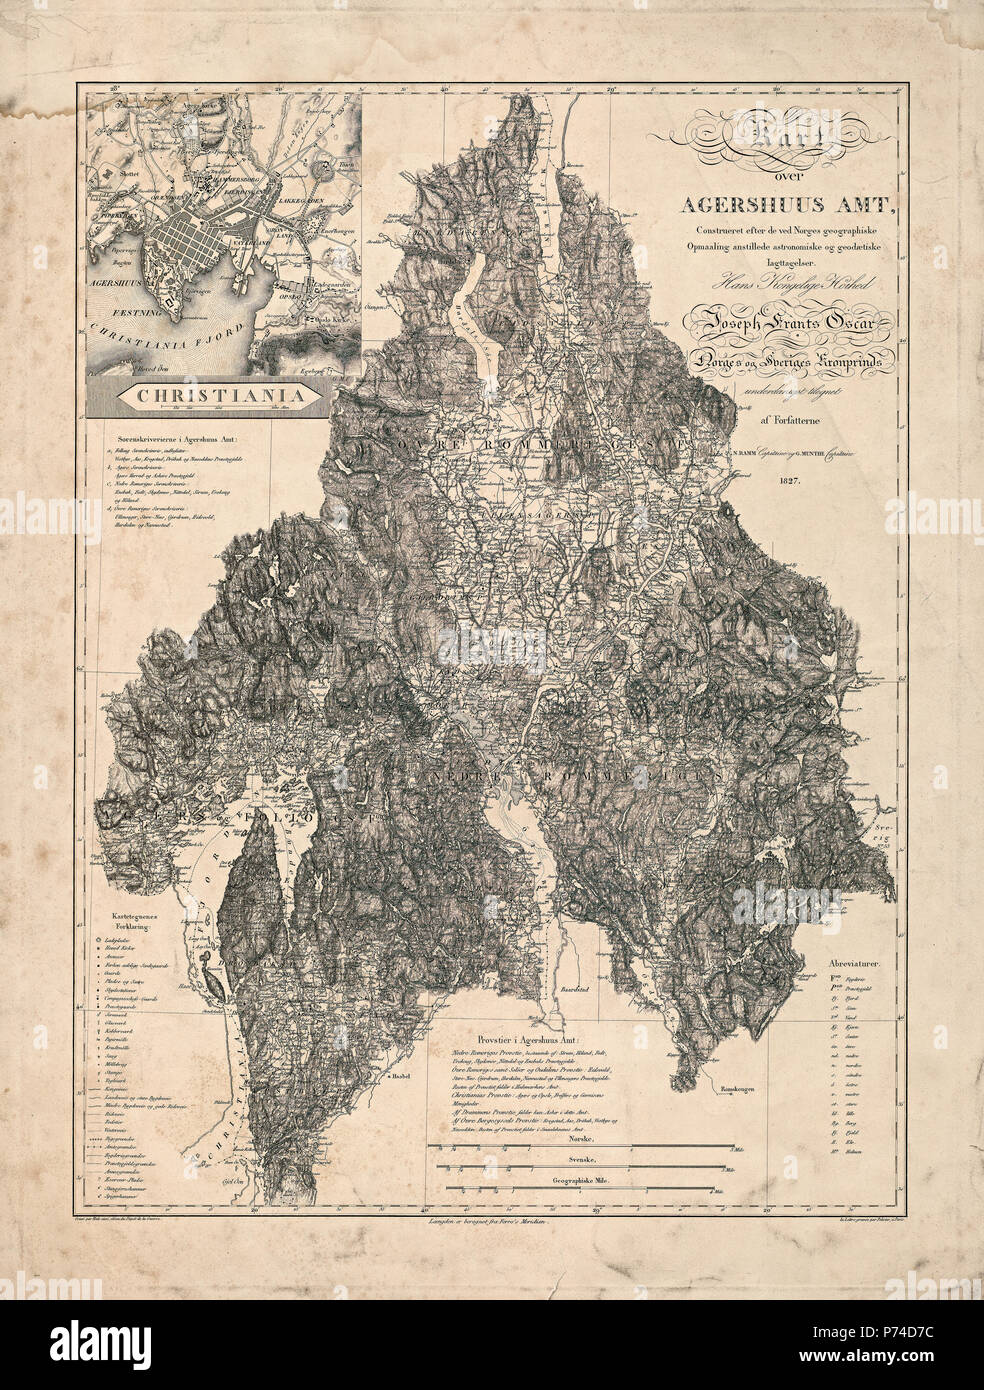 Ramm og Munthes kart sur amt Akershus, 1827 - Ramm et Munthes site de comté d'Akershus, cartographe 1827 N. Ramm og G. Munthe Banque D'Images